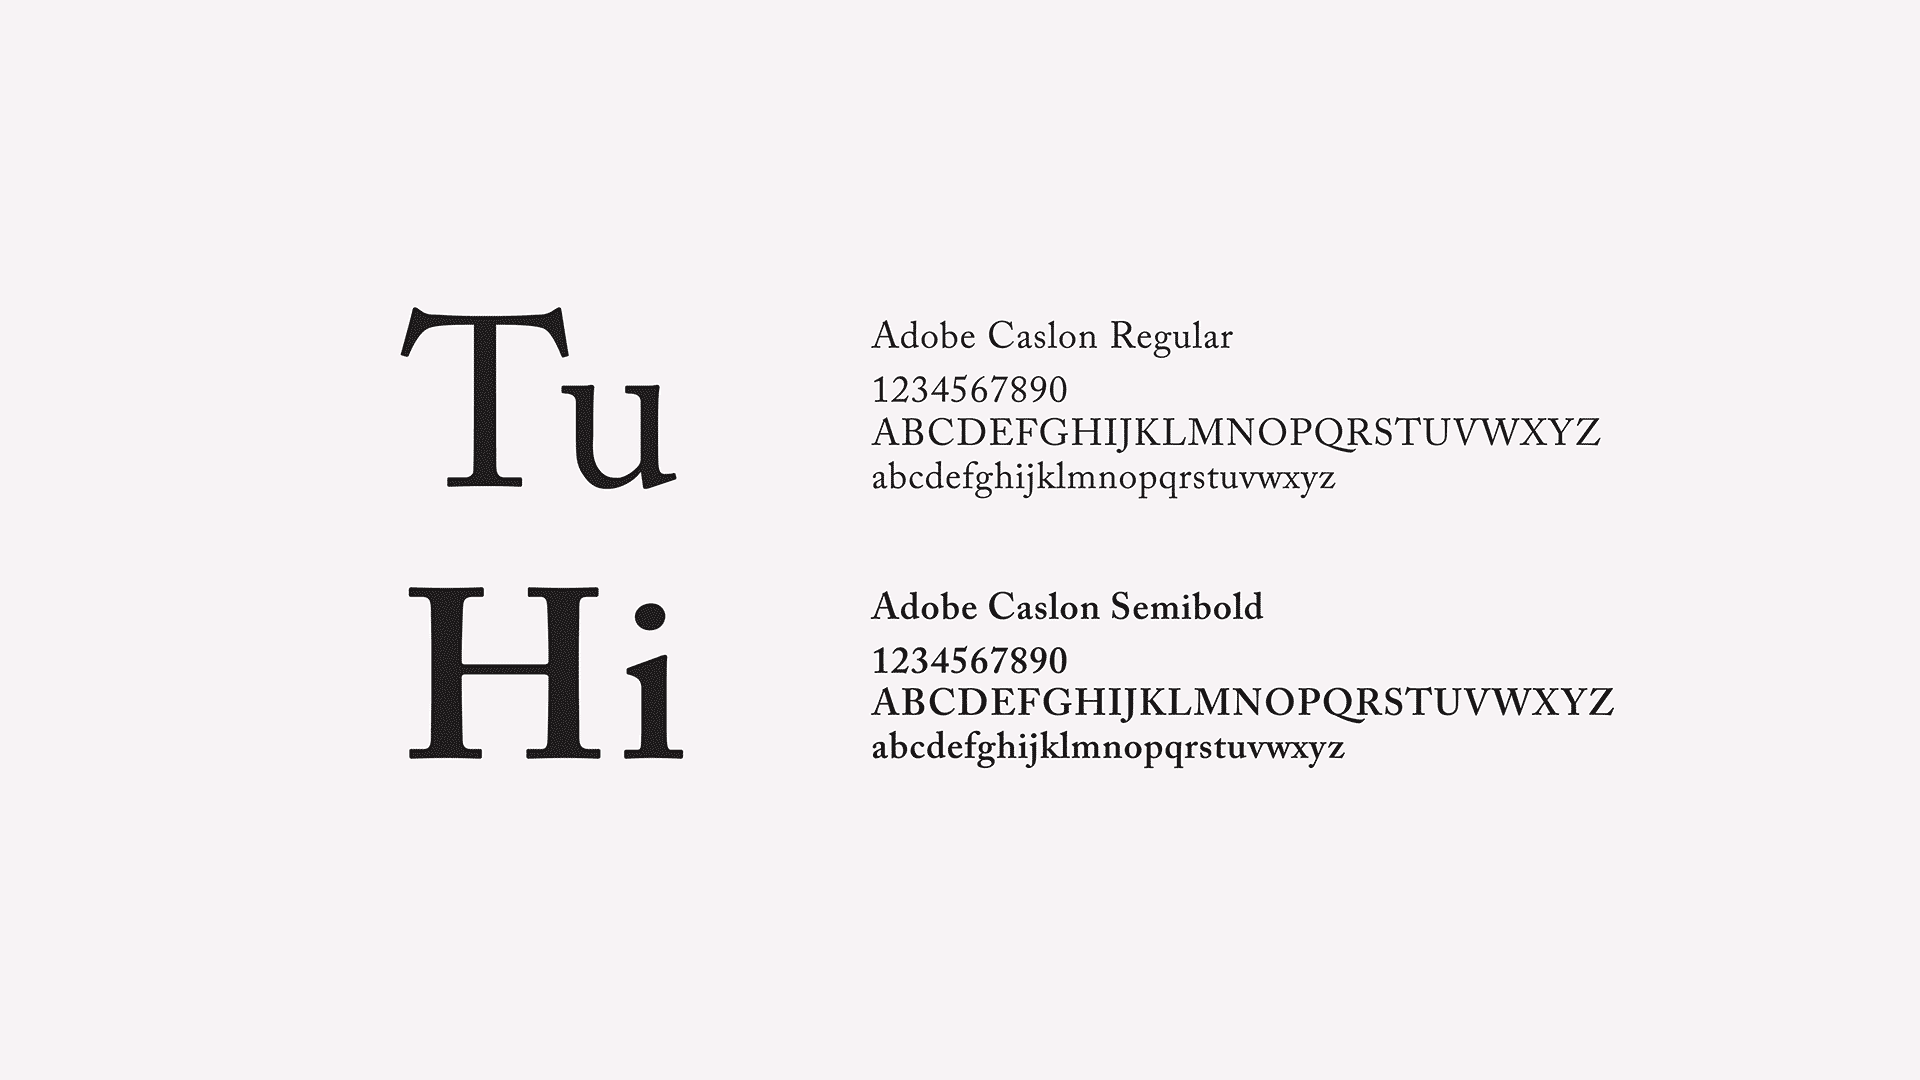 Turner HIll fonts of adobe caslon regular and Adobe caslon bold